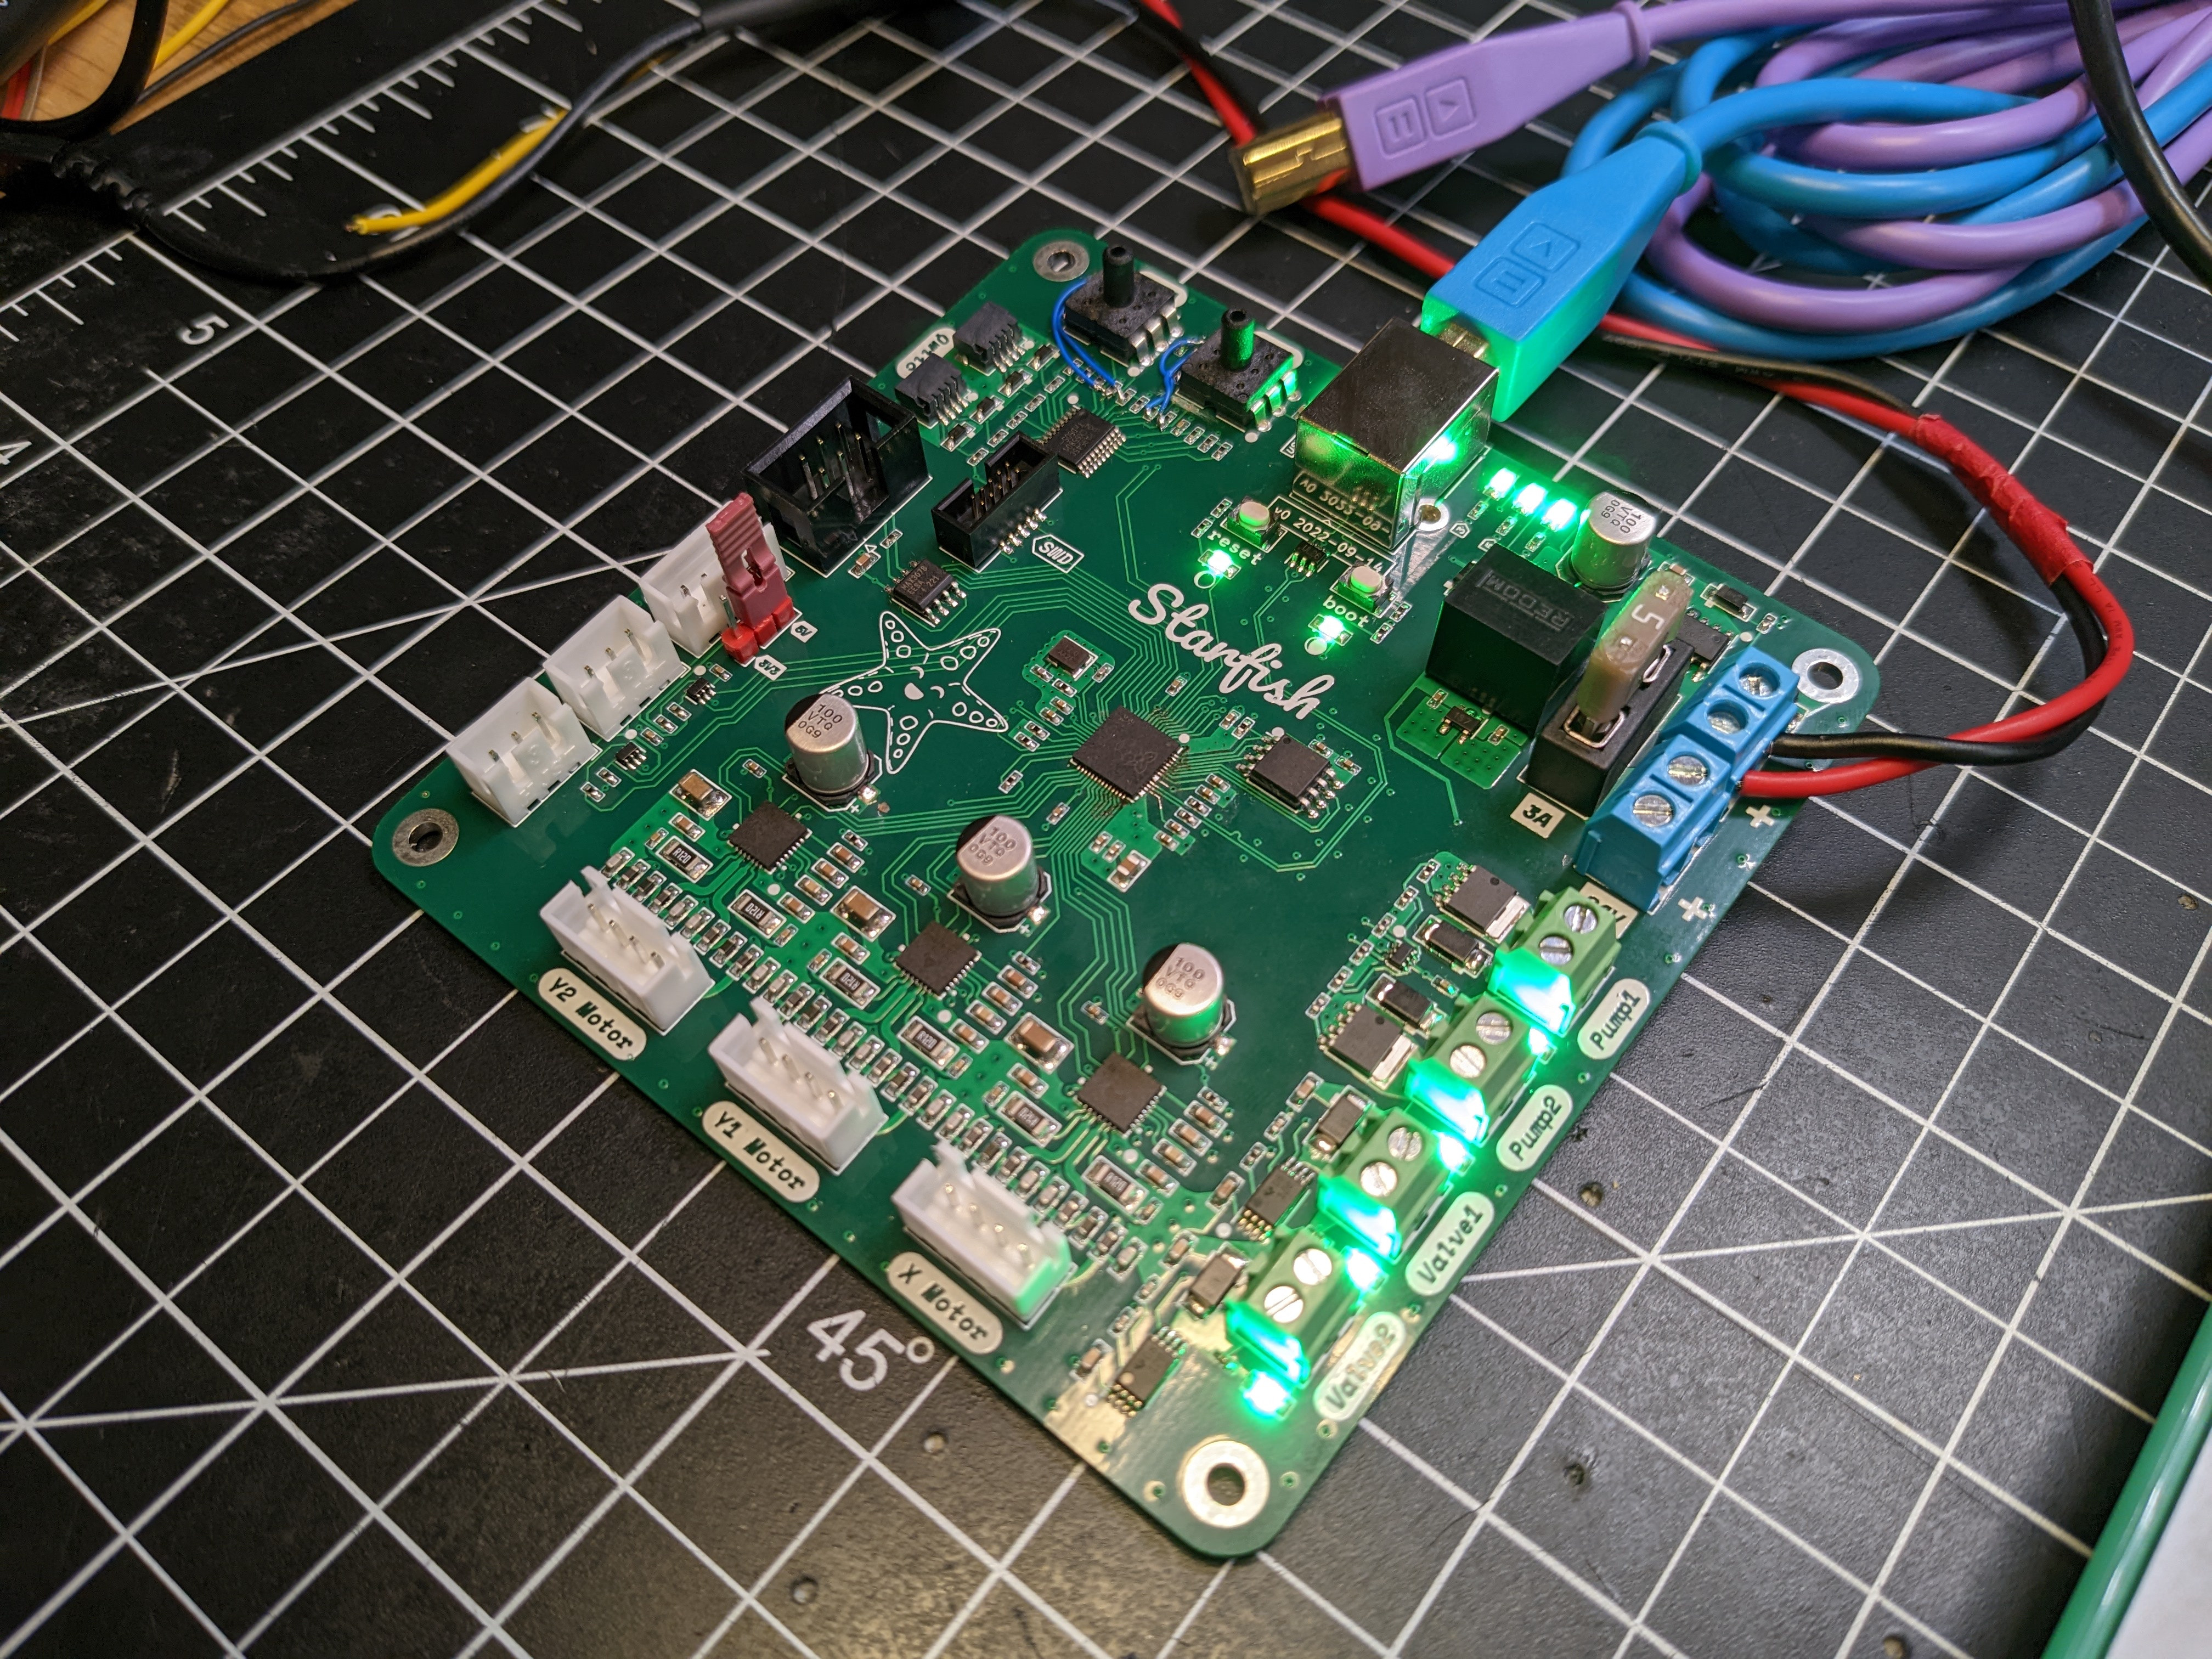 StarFish Raspberry Pi RP2040 PnP control board